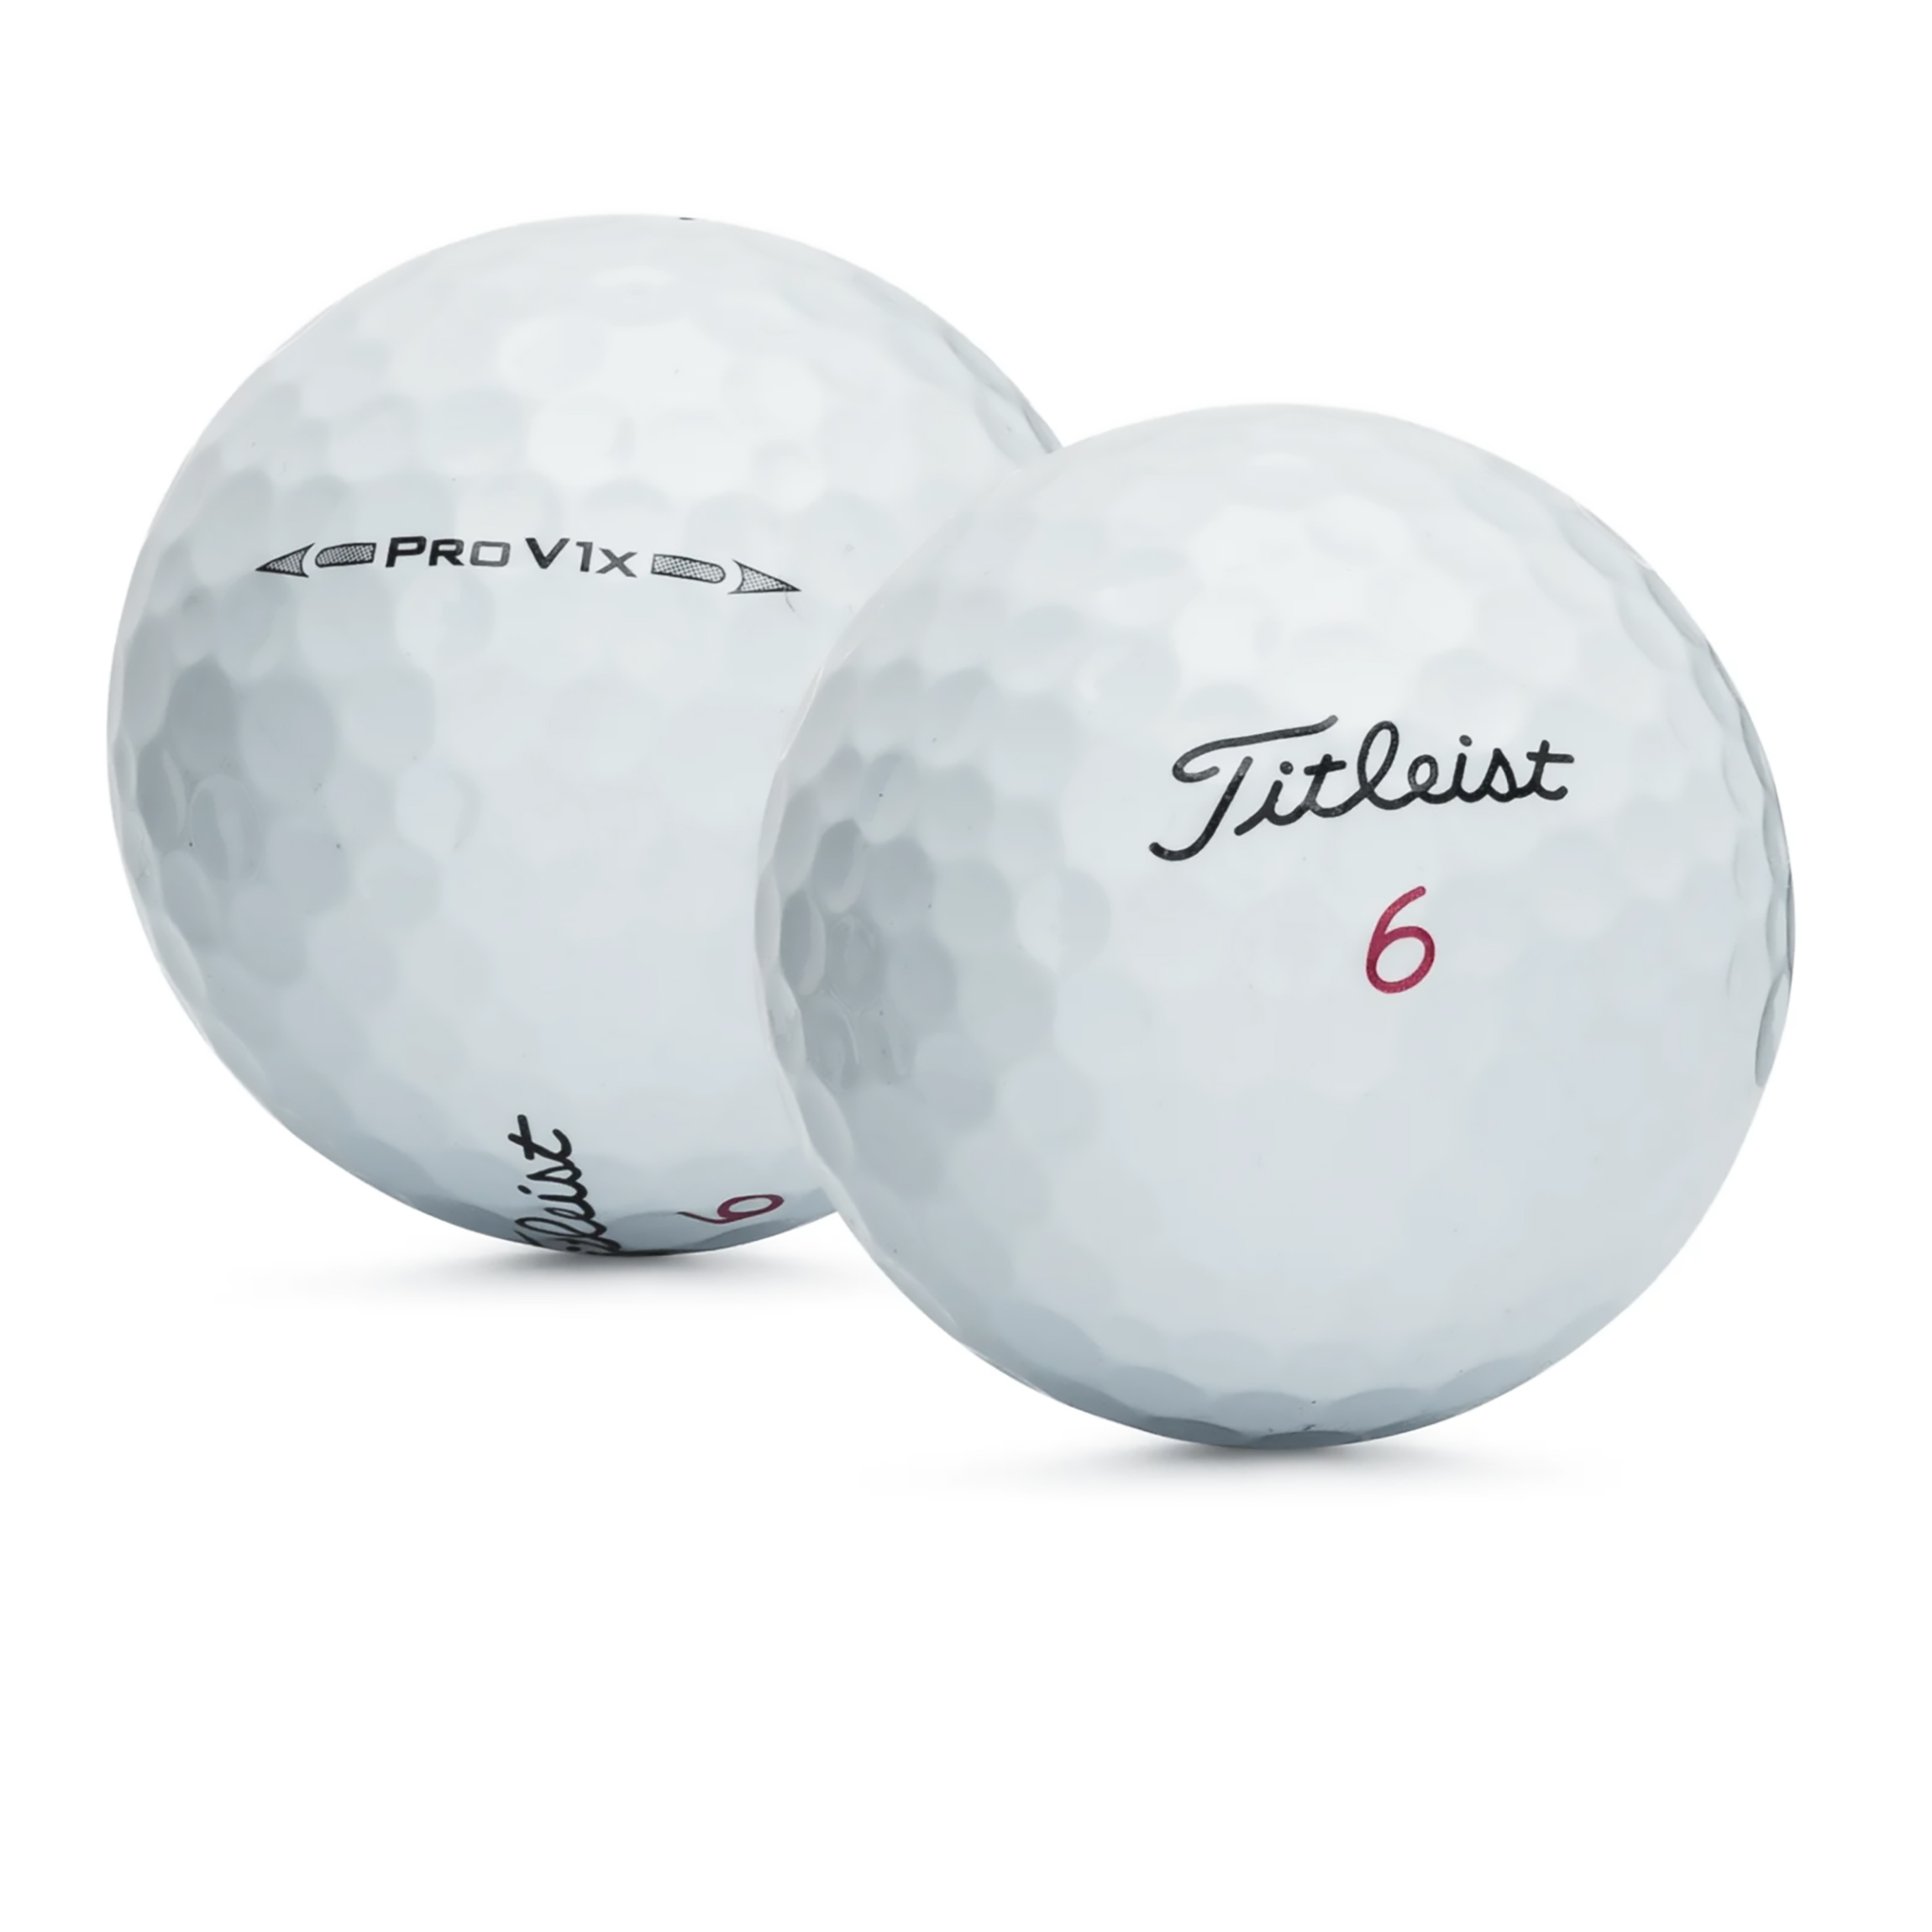 Titleist Pro V1x, Mint Quality, 36 Golf Balls, by Hunter Golf - image 1 of 9